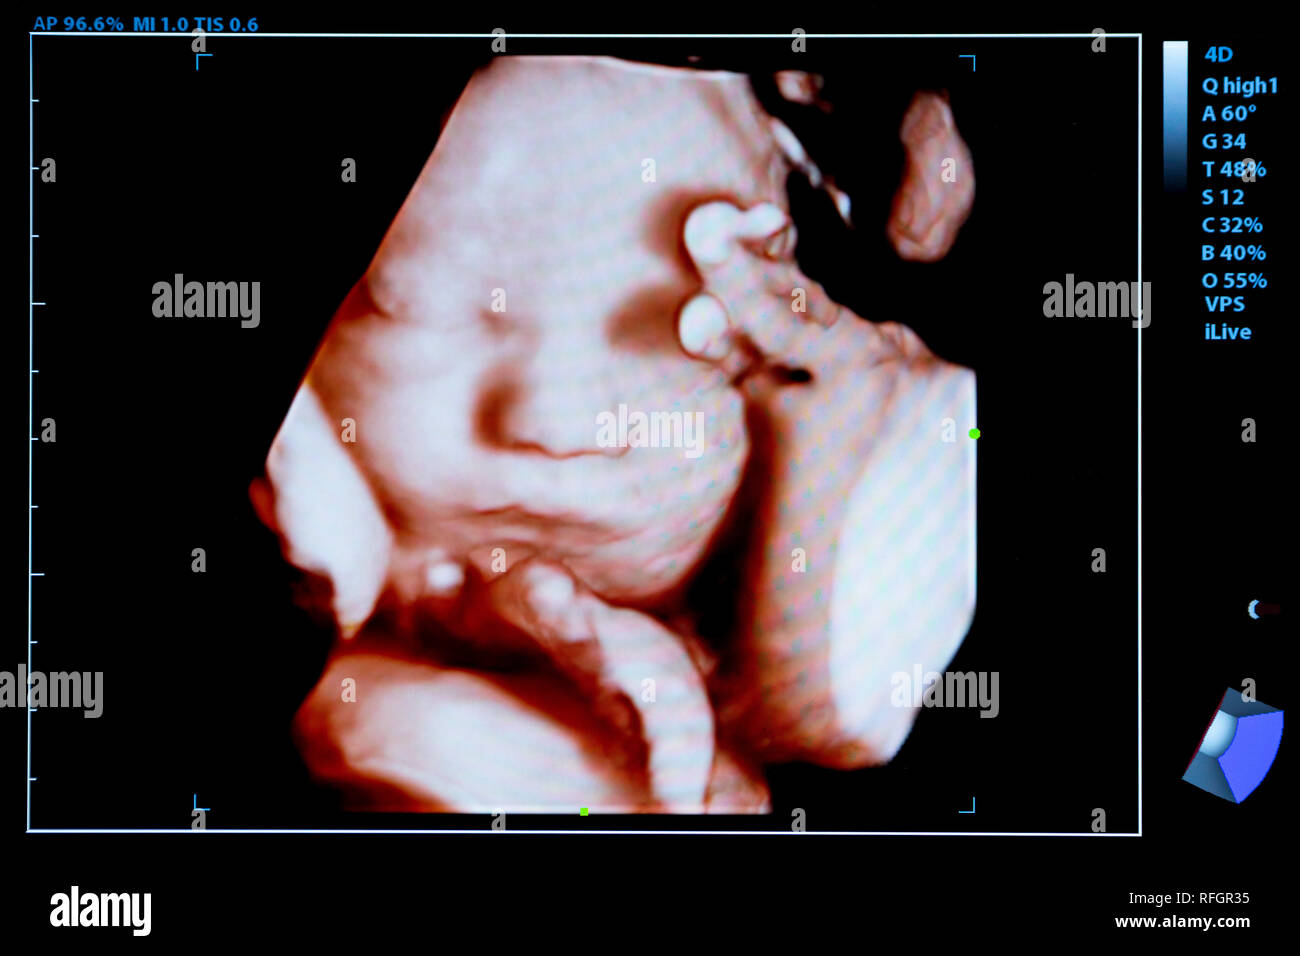 https://c8.alamy.com/comp/RFGR35/colourful-image-of-modern-ultrasound-monitor-ultrasonography-machine-high-technology-medical-and-healthcare-equipment-ultrasound-imaging-or-sonogra-RFGR35.jpg